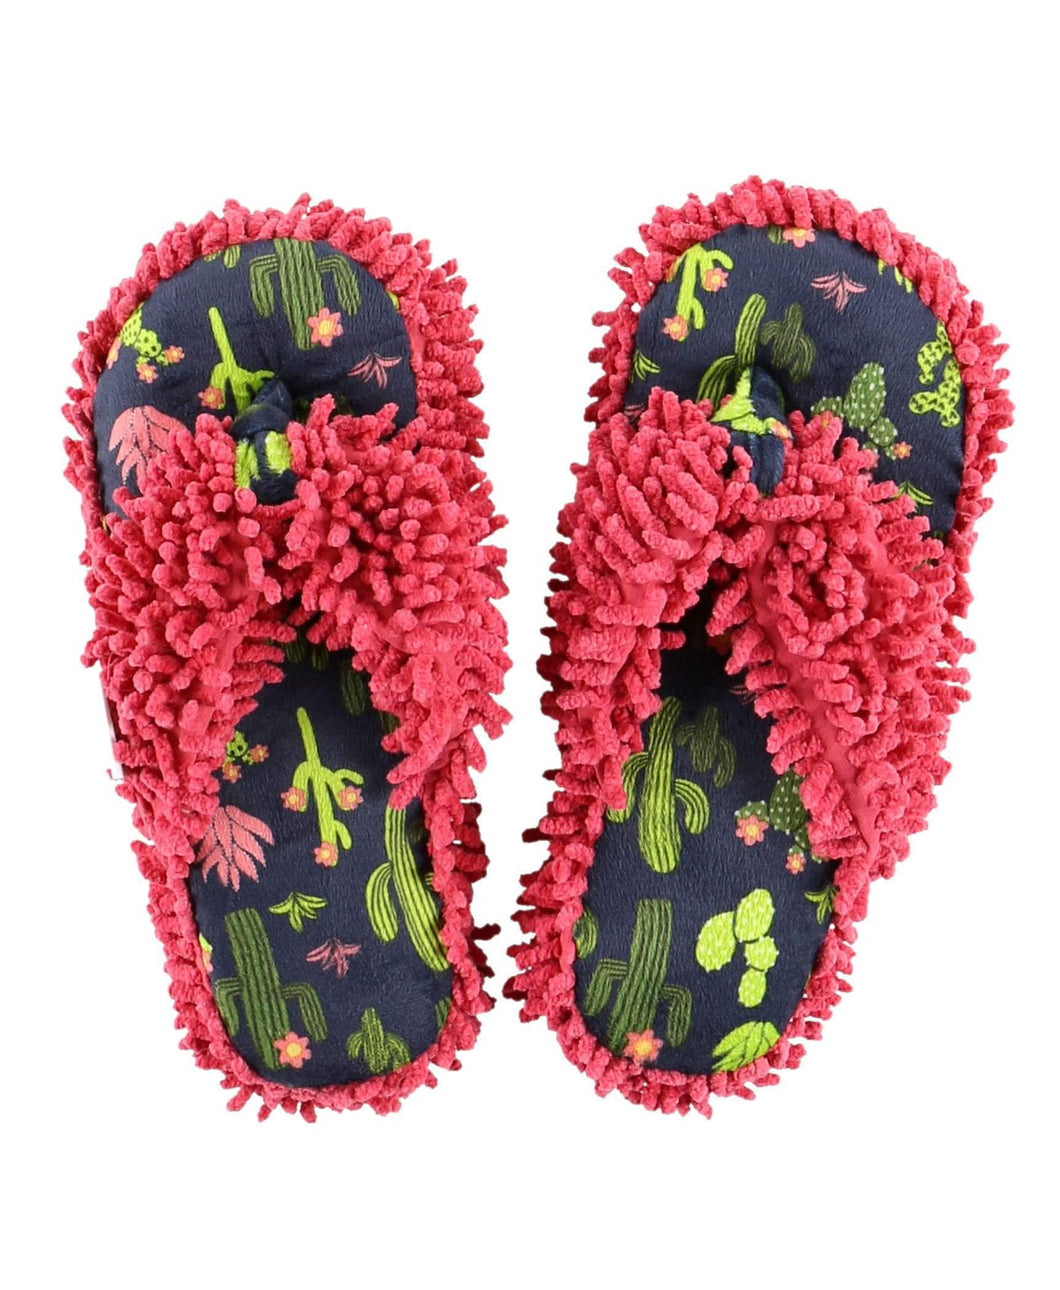 Women's cactus spa flip flop / slipper | soft and comfy | cactus print | warm | coral